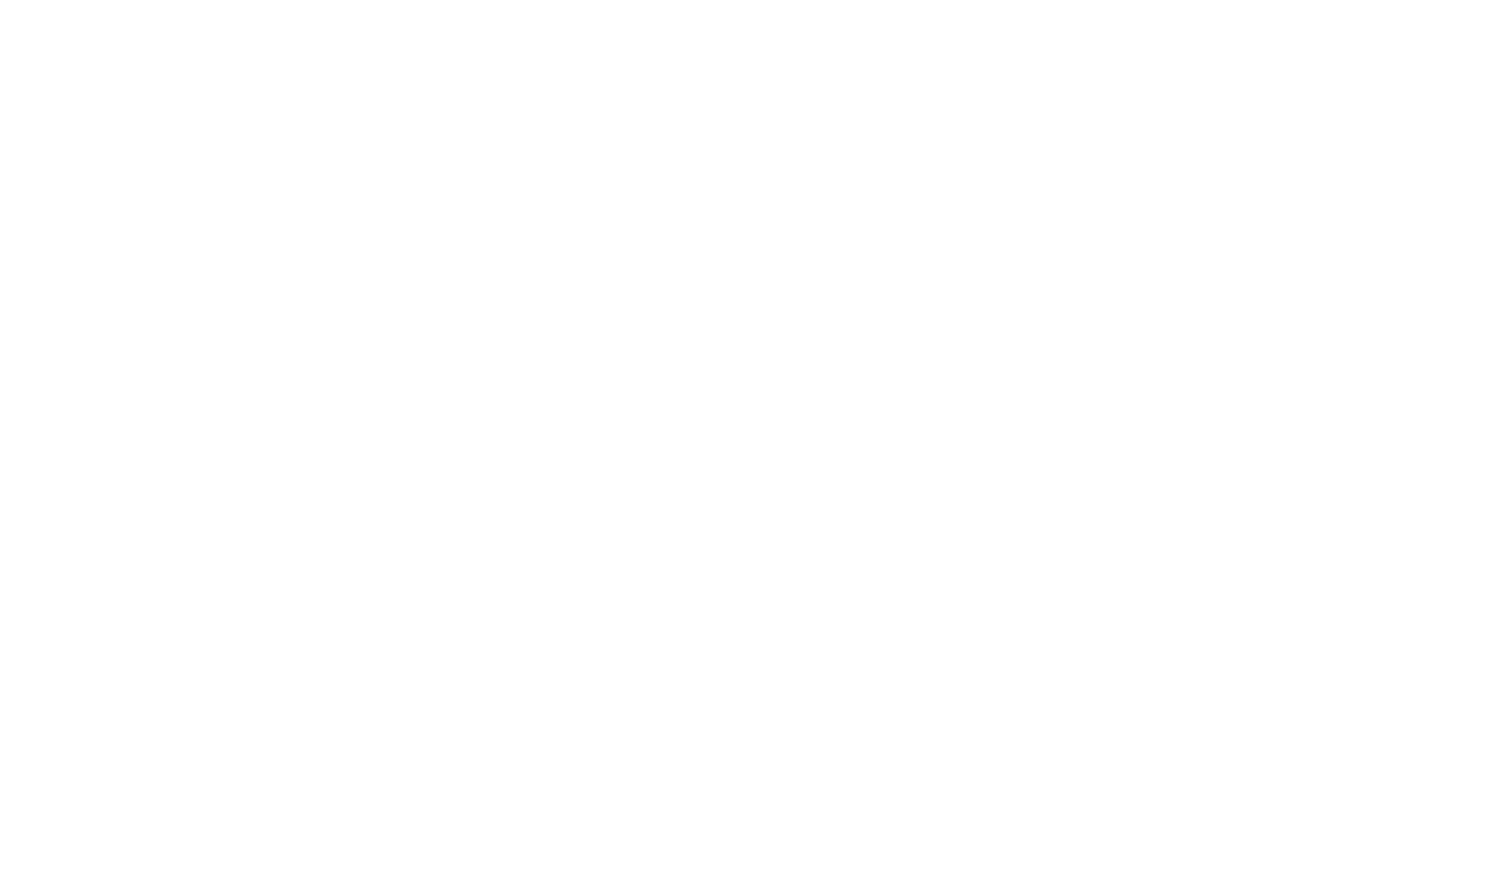 base camp provisions